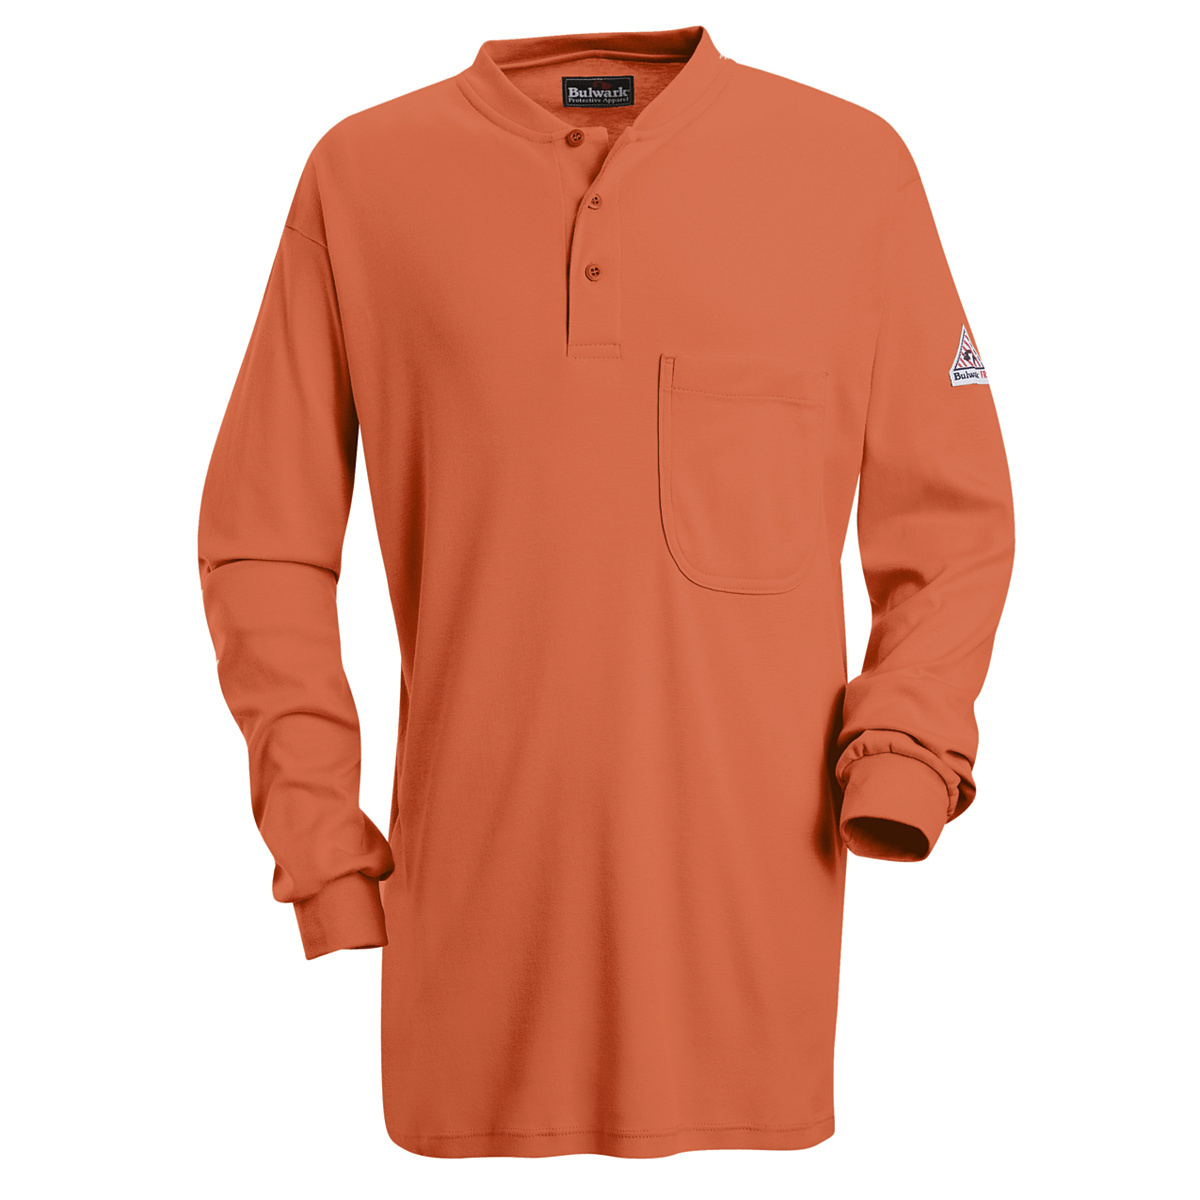 Bulwark® 4X Regular Orange EXCEL FR® Interlock FR Cotton Flame Resistant Henley Shirt With Button Front Closure